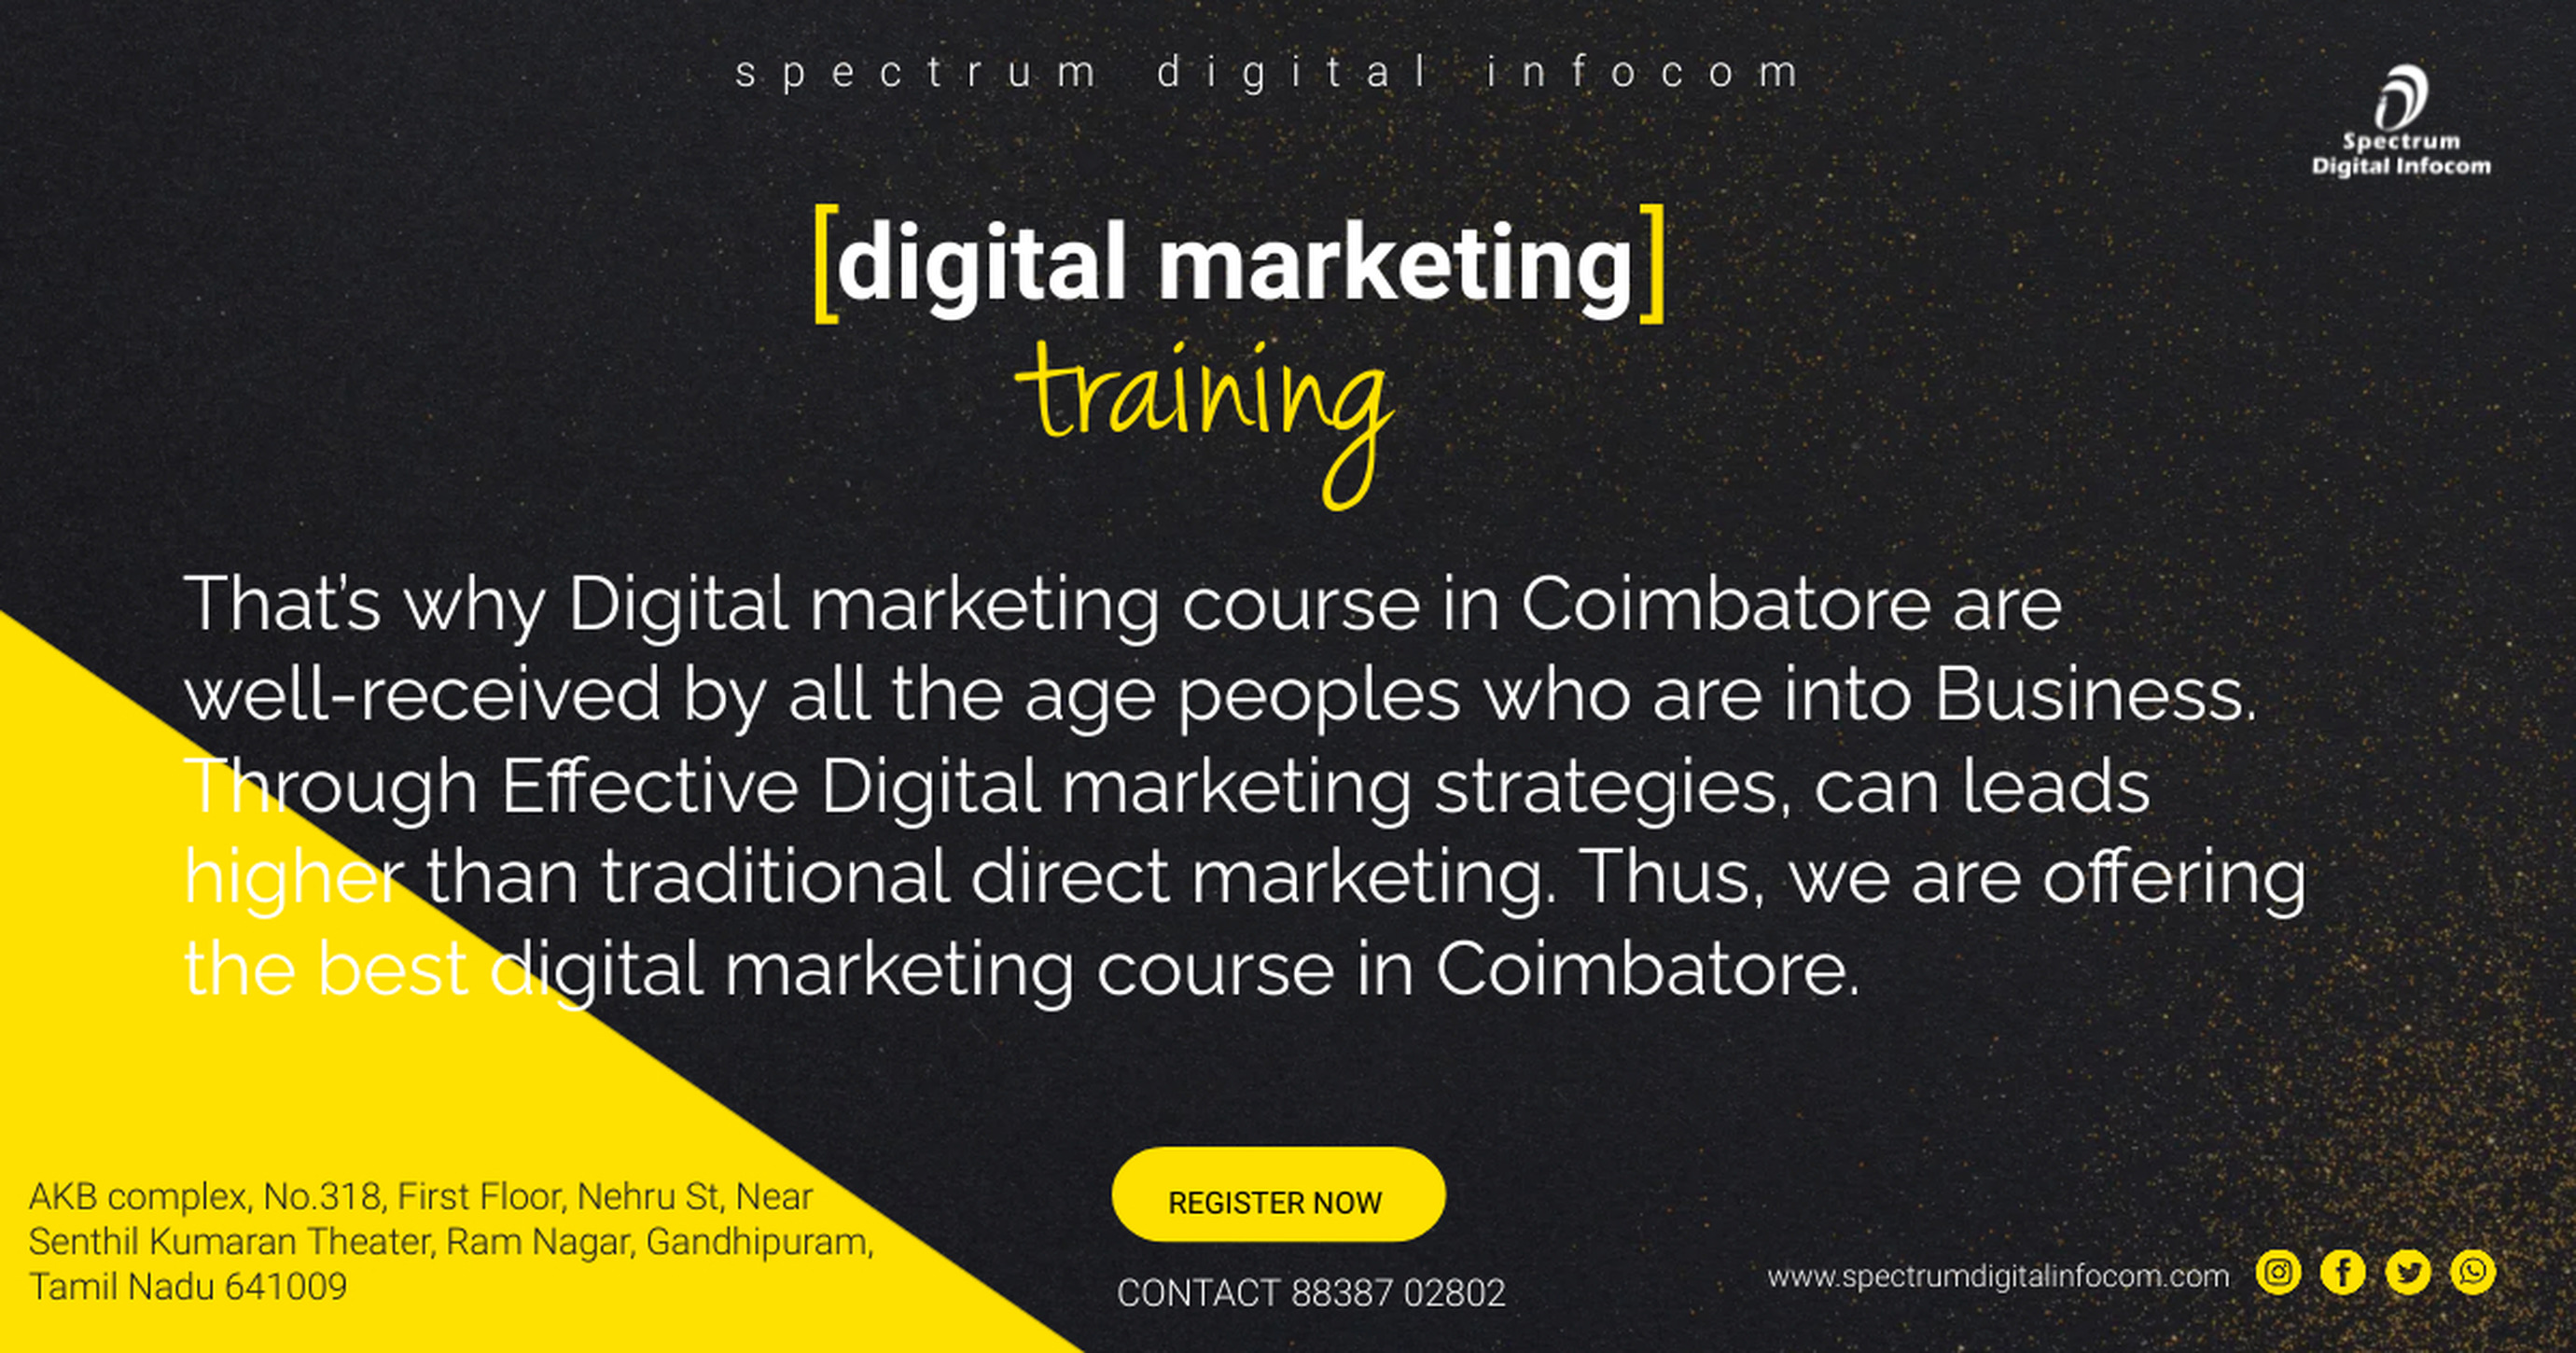 digital marketing training in Coimbatore82582252, Online Event